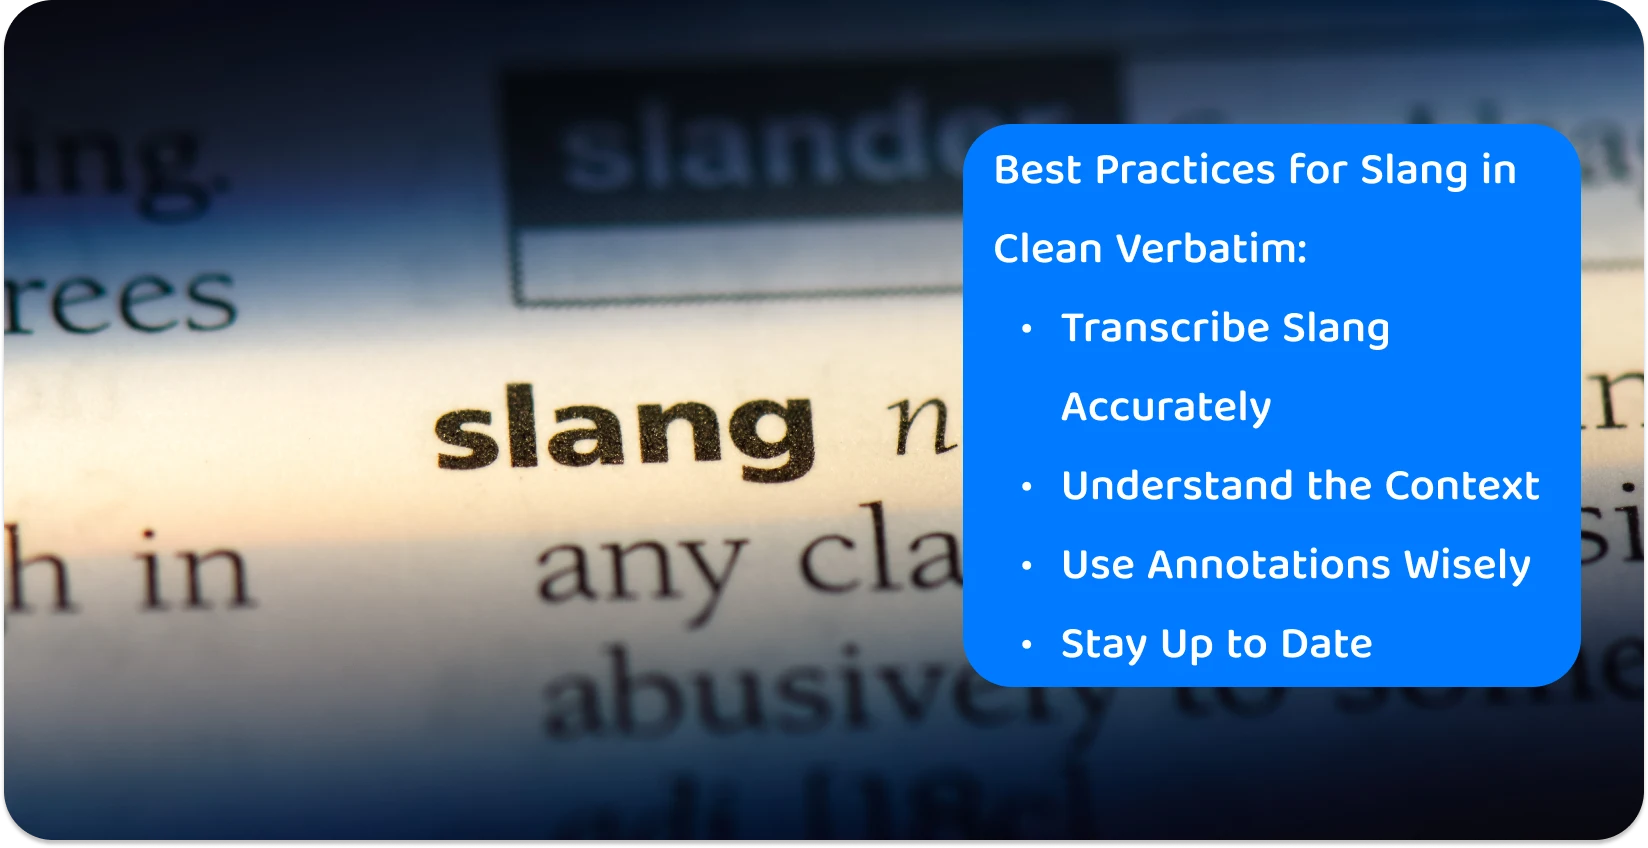 Tutup perkataan 'slang' dalam kamus, menonjolkan ketepatan yang diperlukan dalam amalan transkripsi untuk vernakular moden.